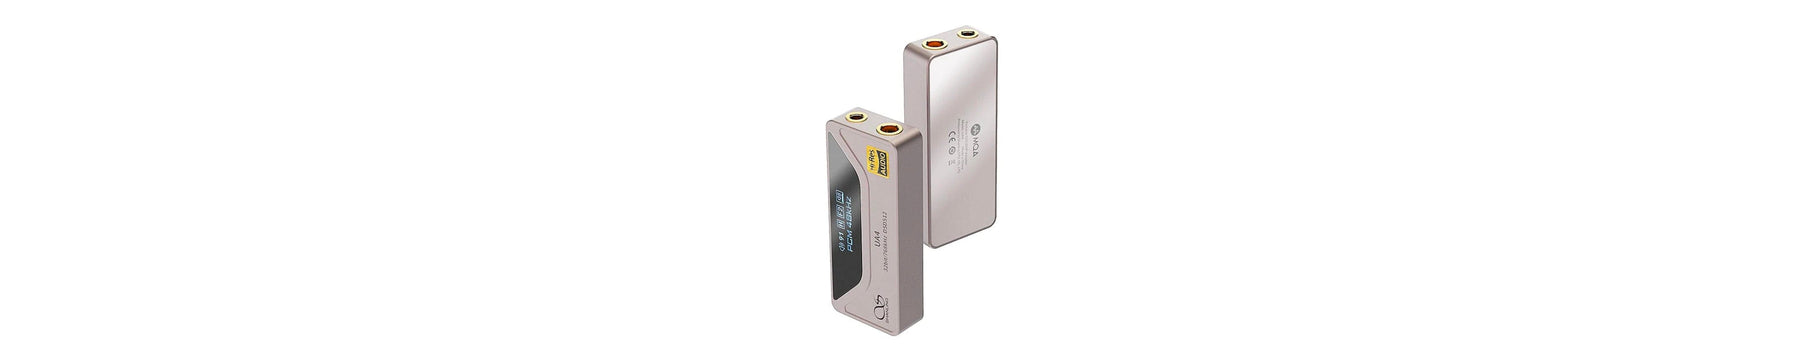 Shanling UA4 Latest ES9069Q High-Performance Portable USB DAC/AMP